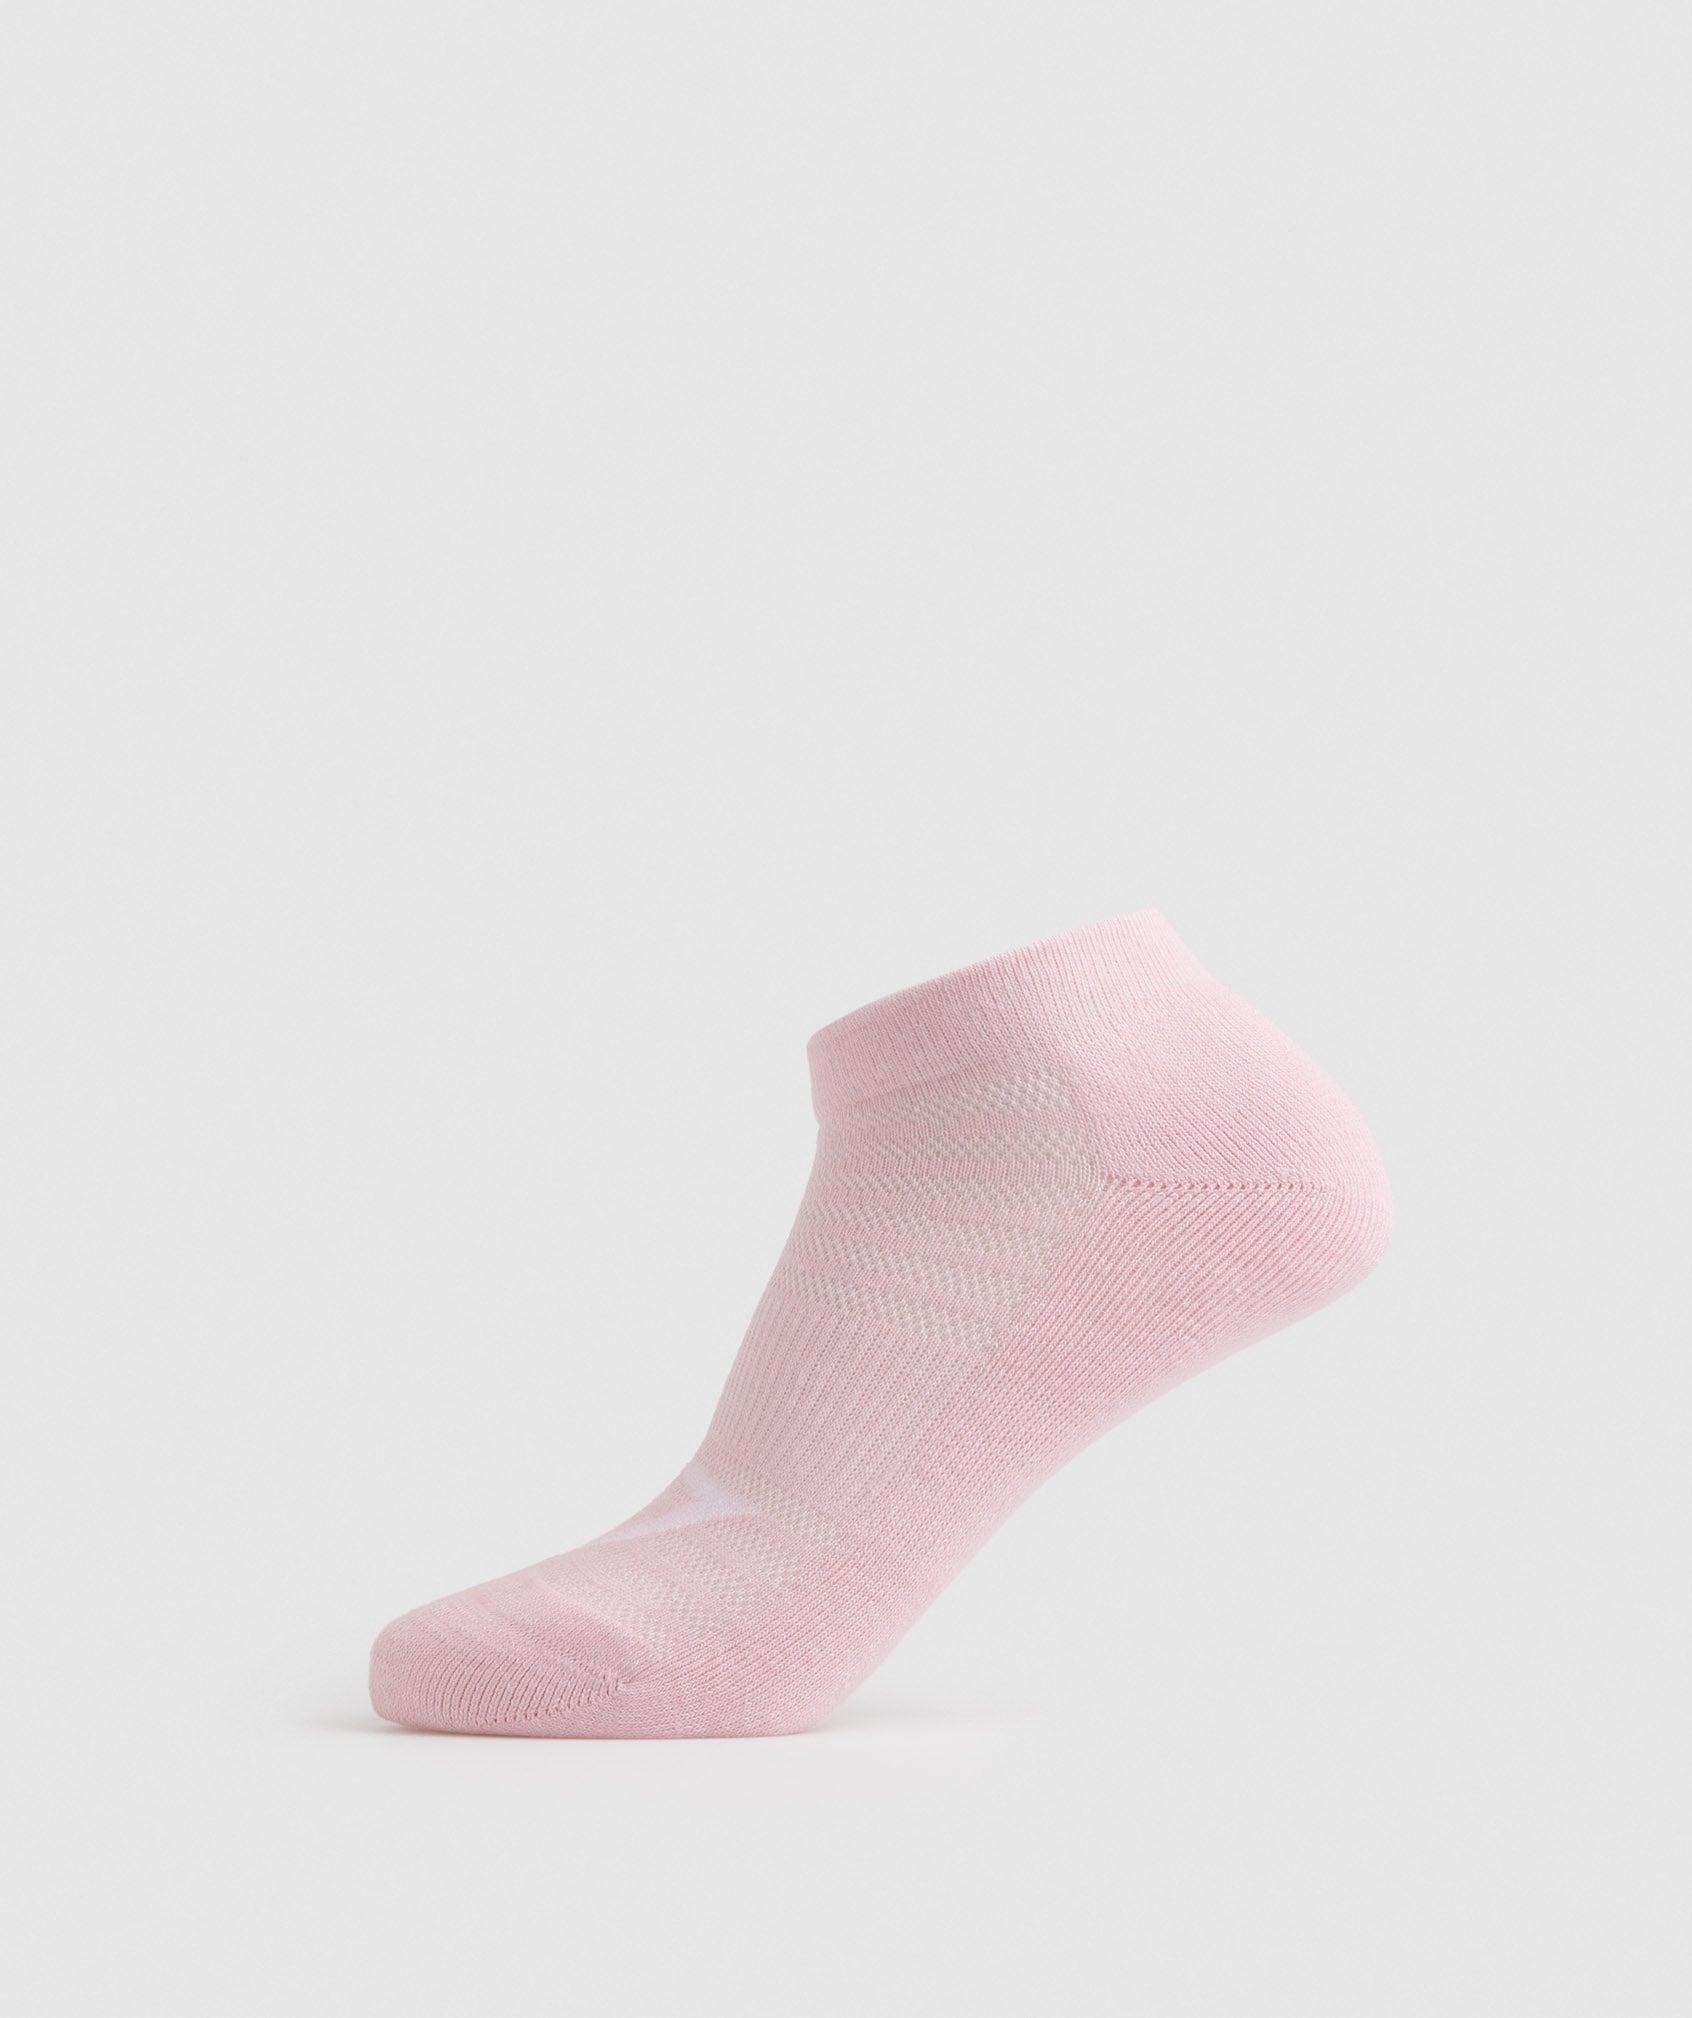 Ankle Socks 3pk in Baked Maroon/Sweet Pink/White - view 6